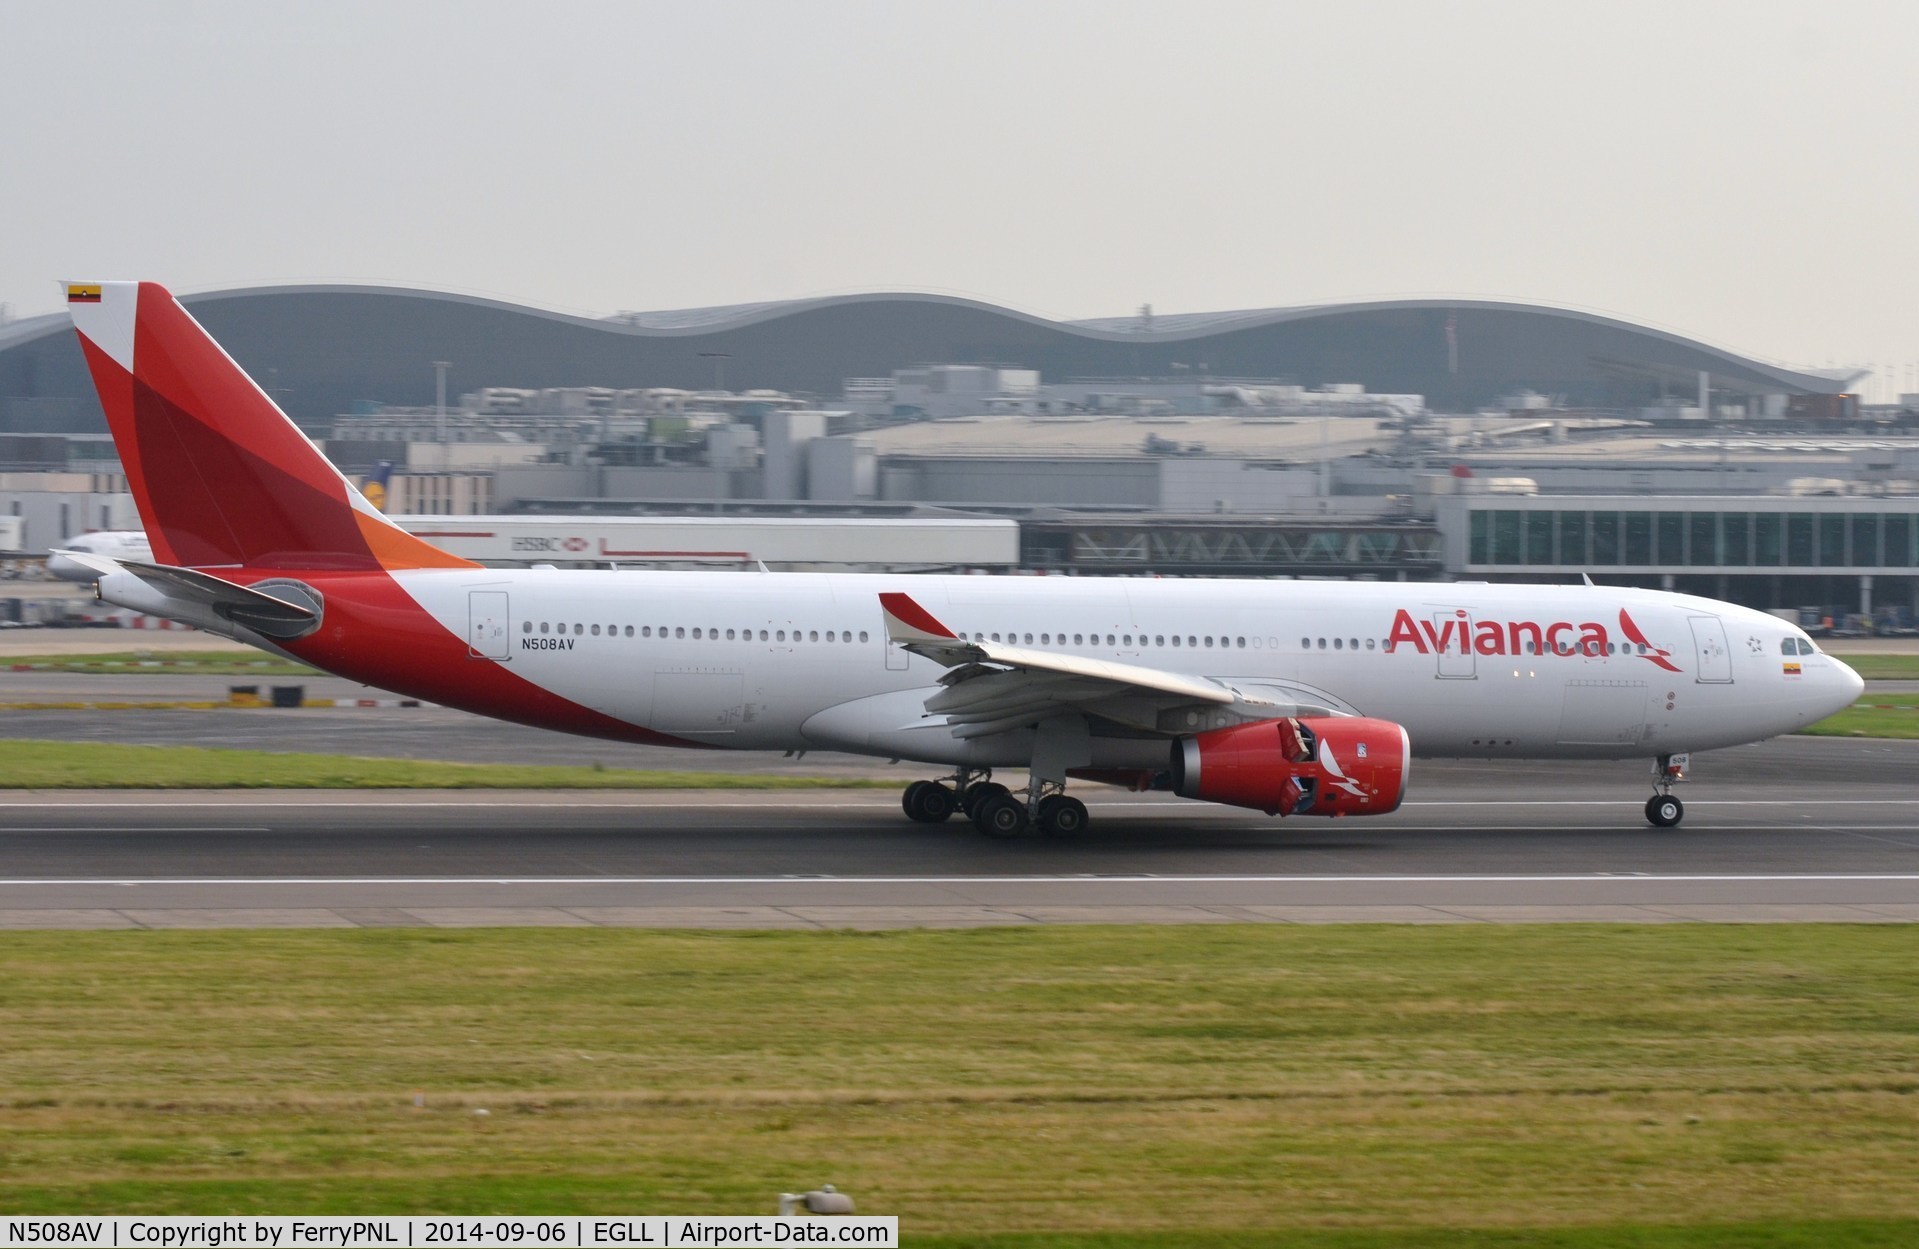 N508AV, 2014 Airbus A330-243 C/N 1508, Avianca A332 lands in LHR